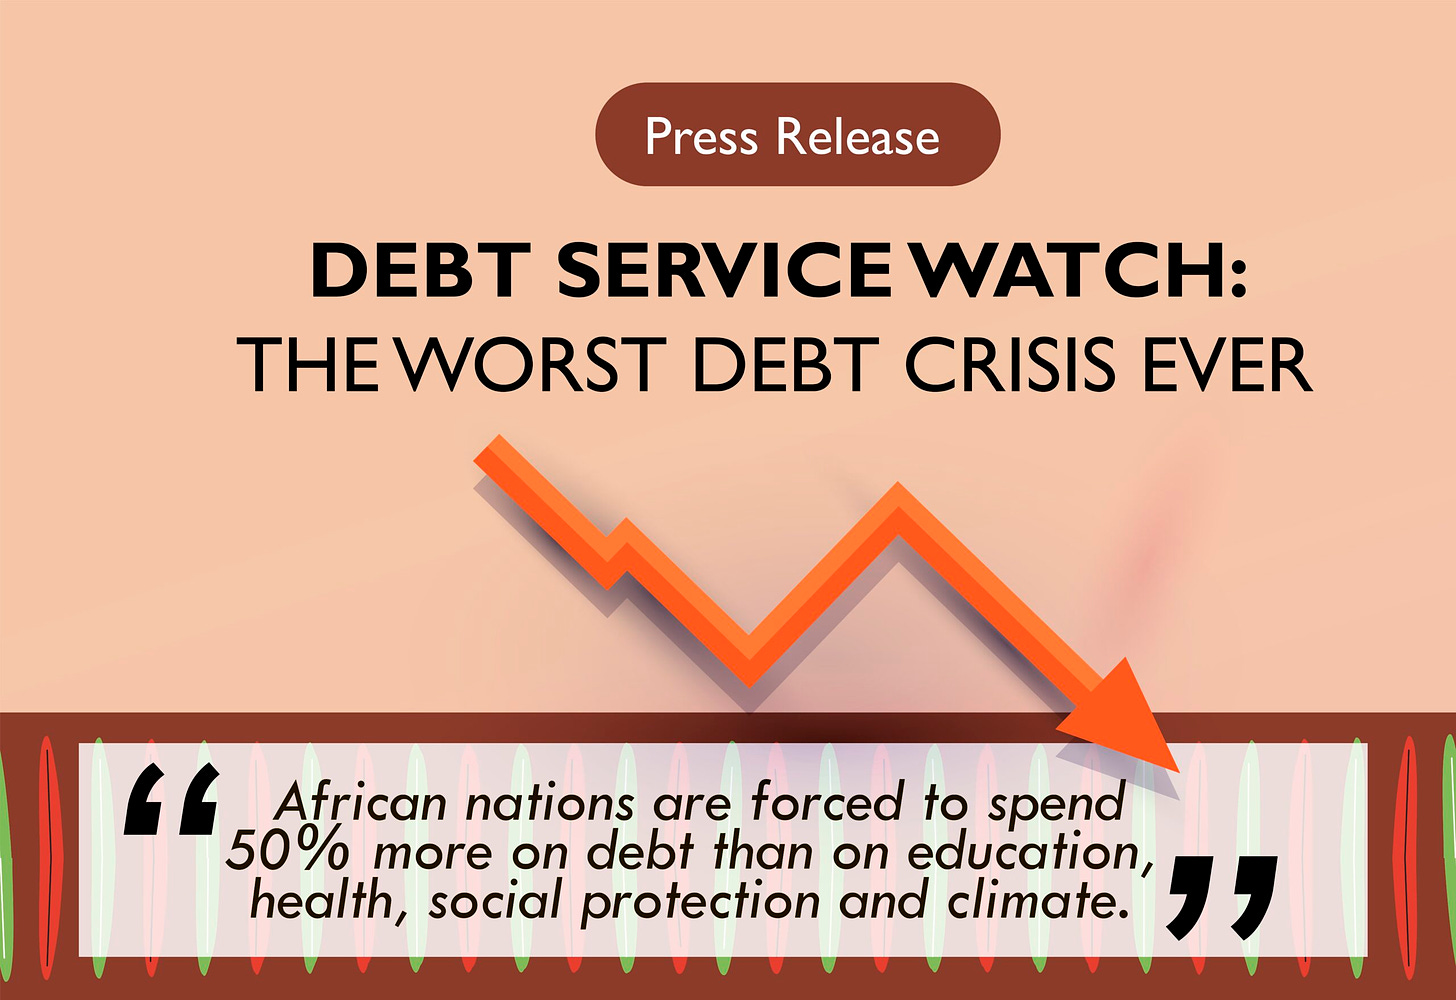 DEBT SERVICE WATCH: THE WORST DEBT CRISIS EVER